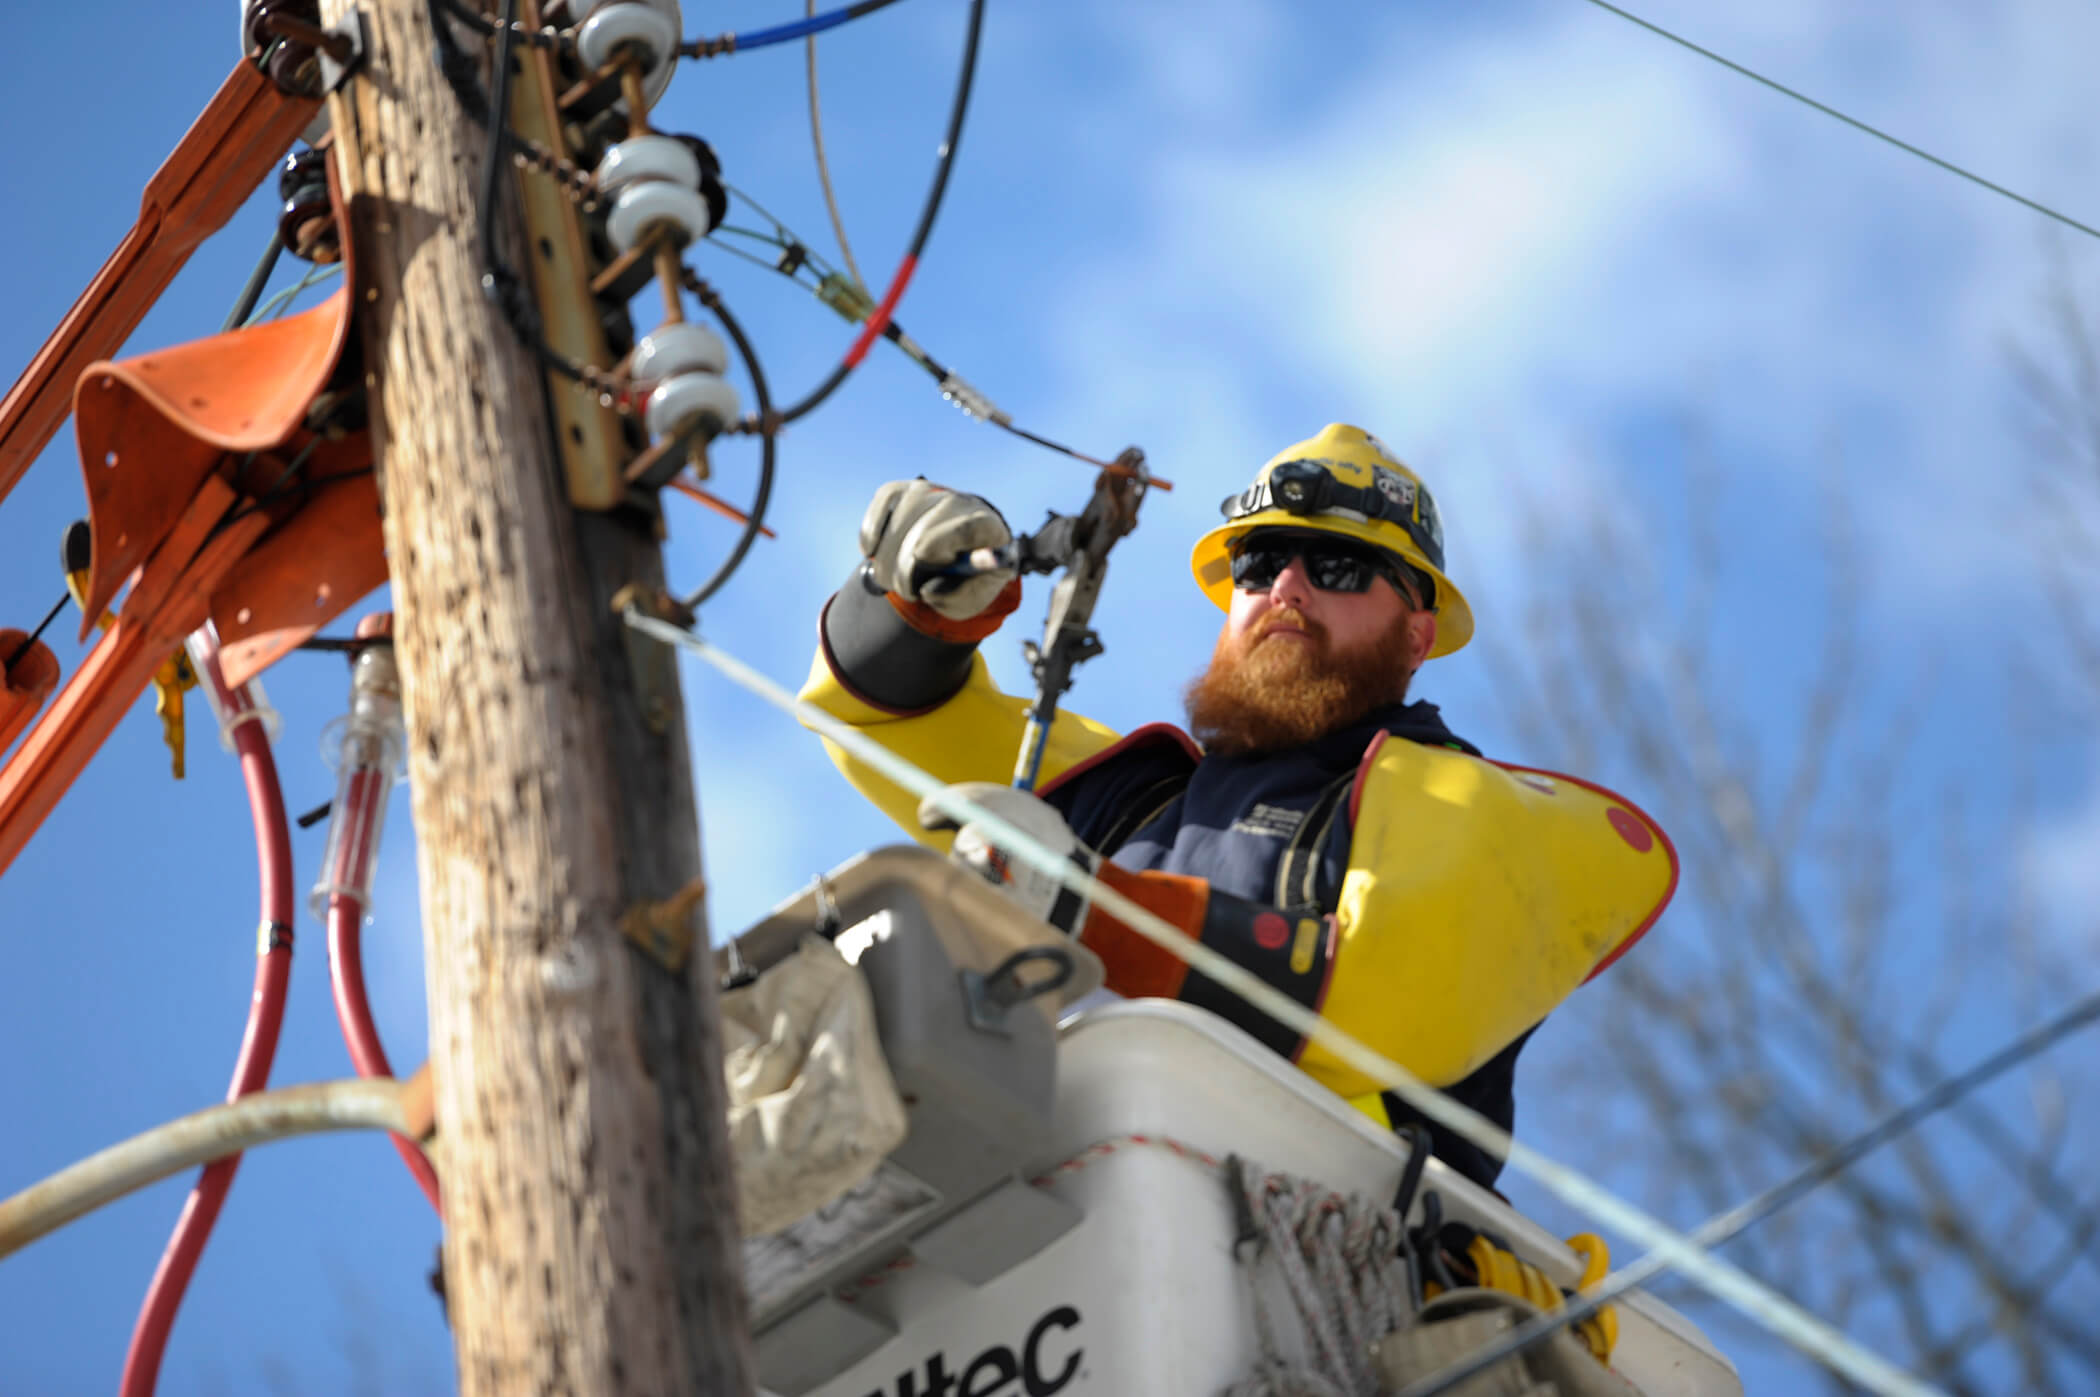 Atlantic City Electric grid resiliency work prepared for increased power demand.